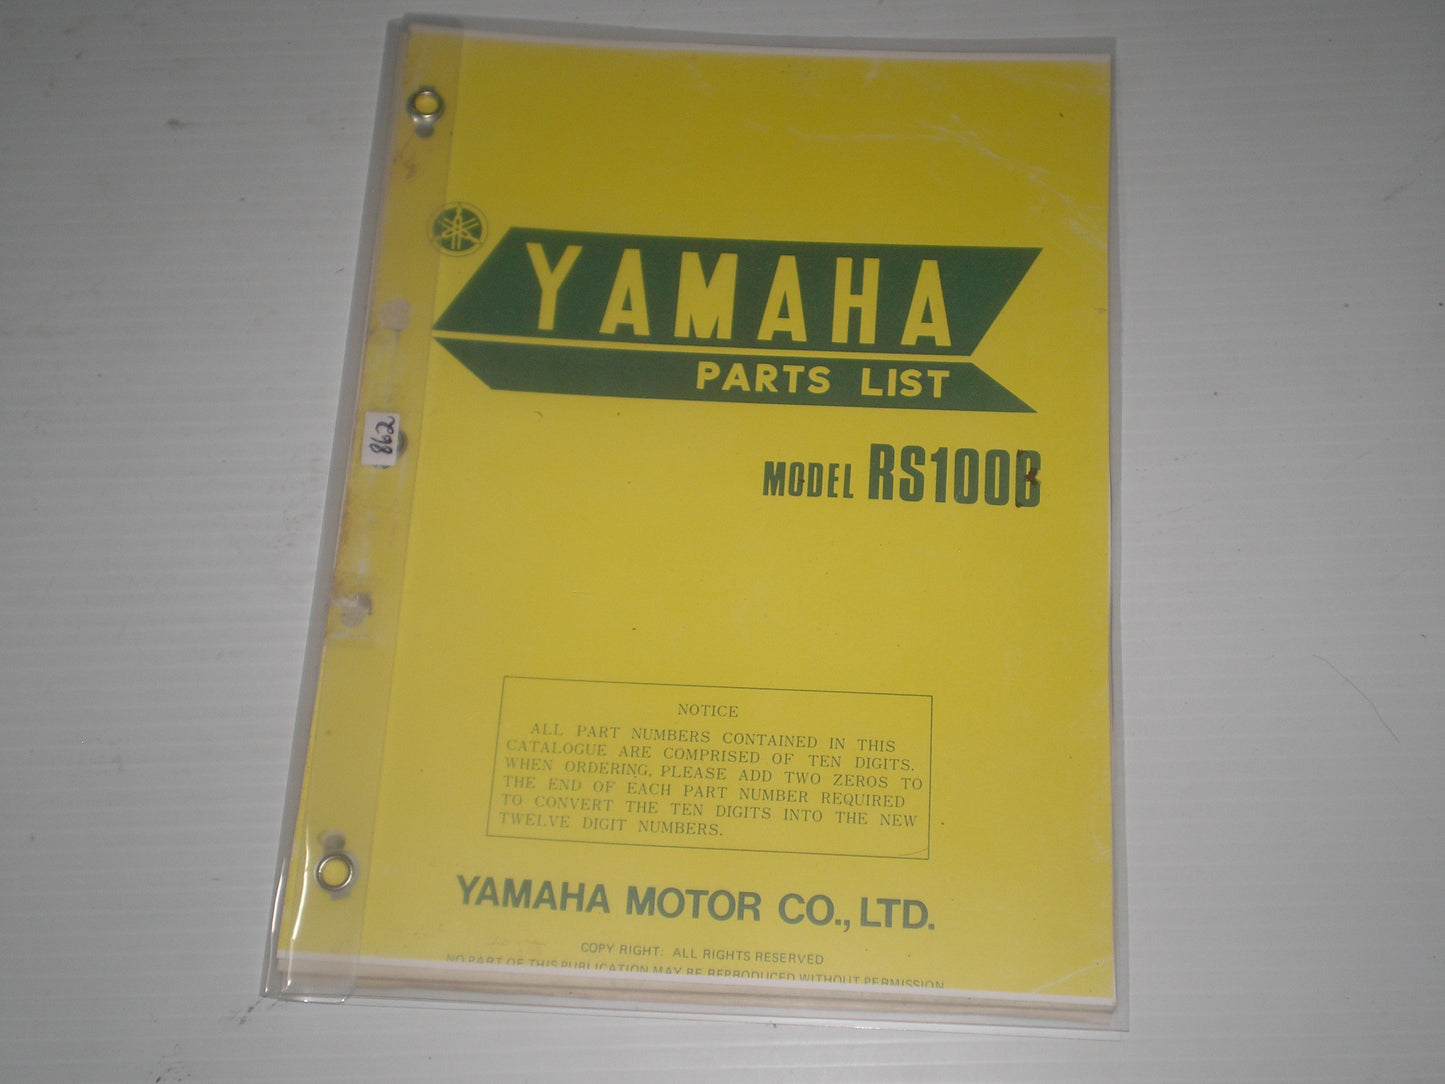 YAMAHA RS100 B  1975  Parts List / Catalogue  465-28198-60  LIT-10014-65-00  #862